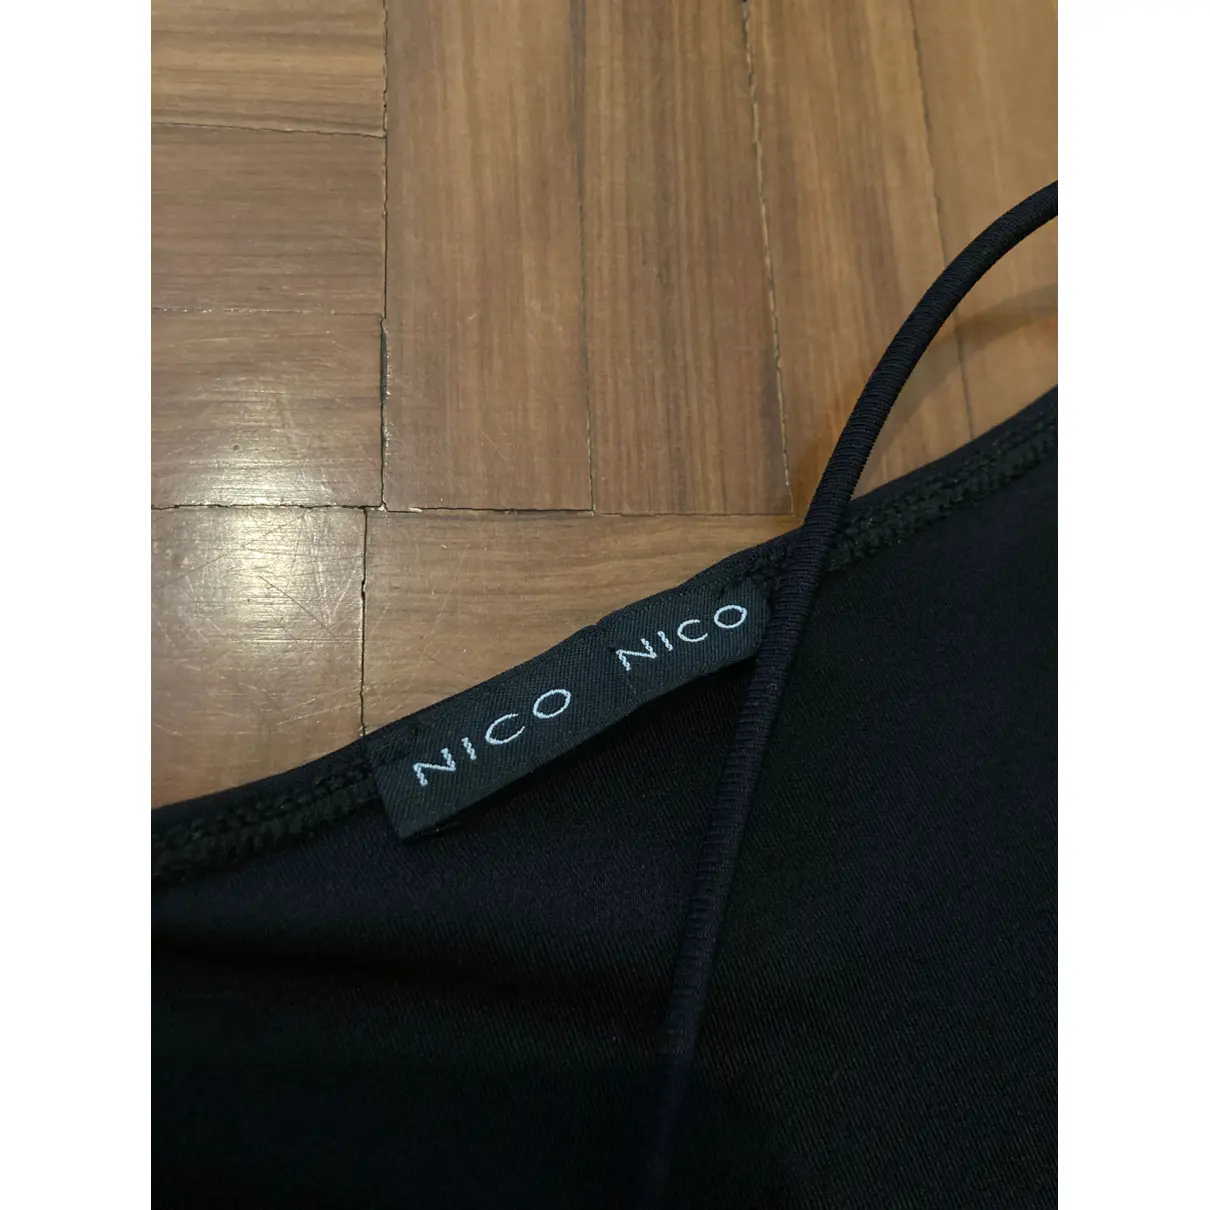 Buy NICO . NICO Dress online